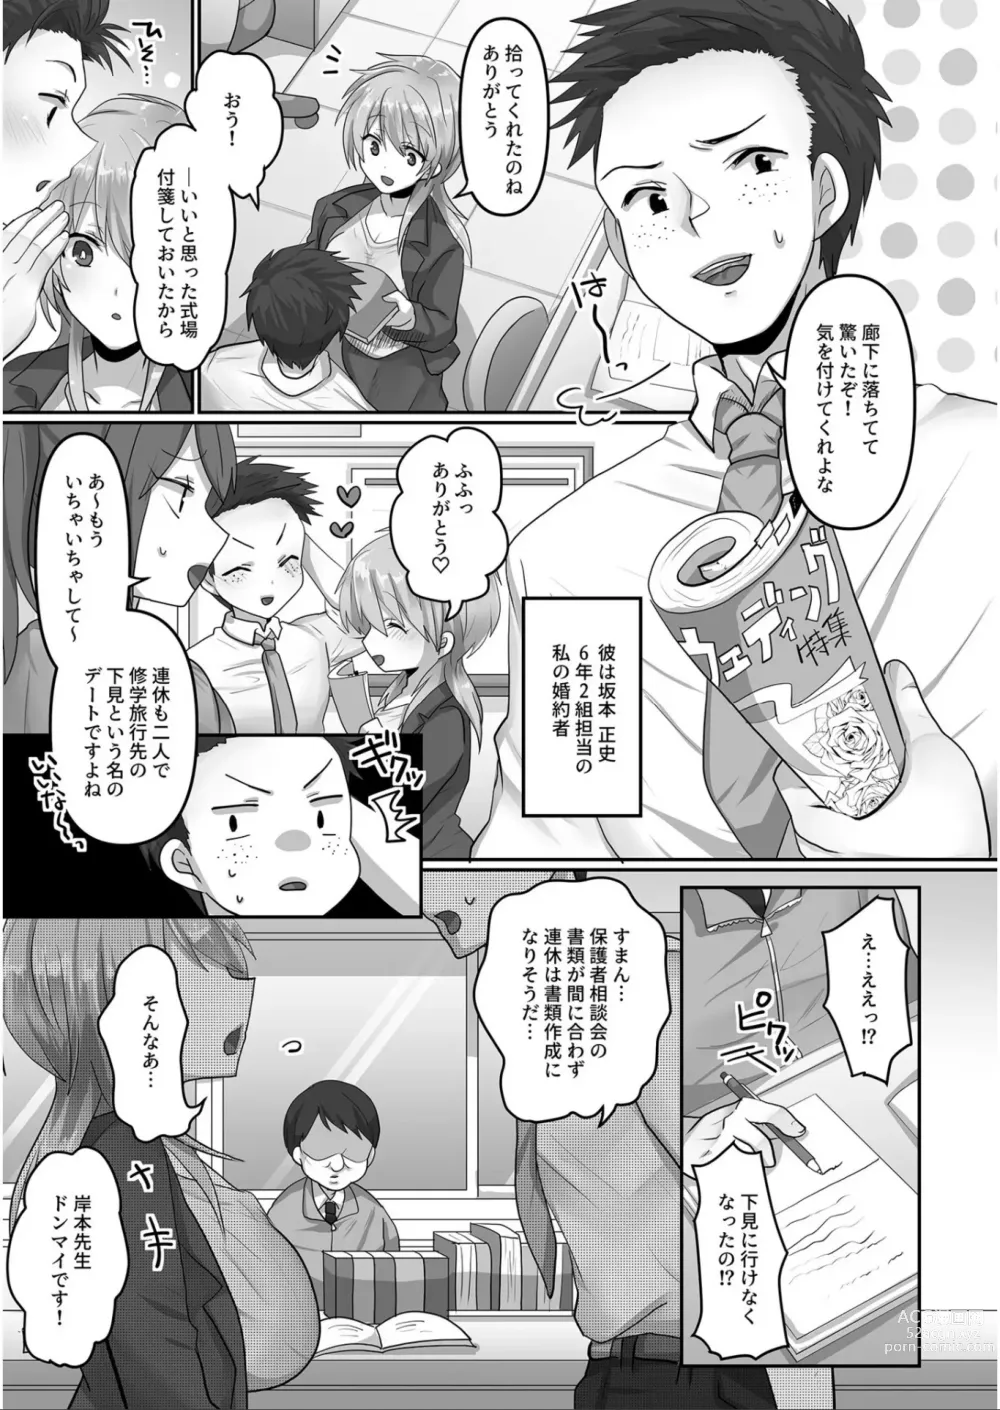 Page 4 of manga Kegasareta Watashi...